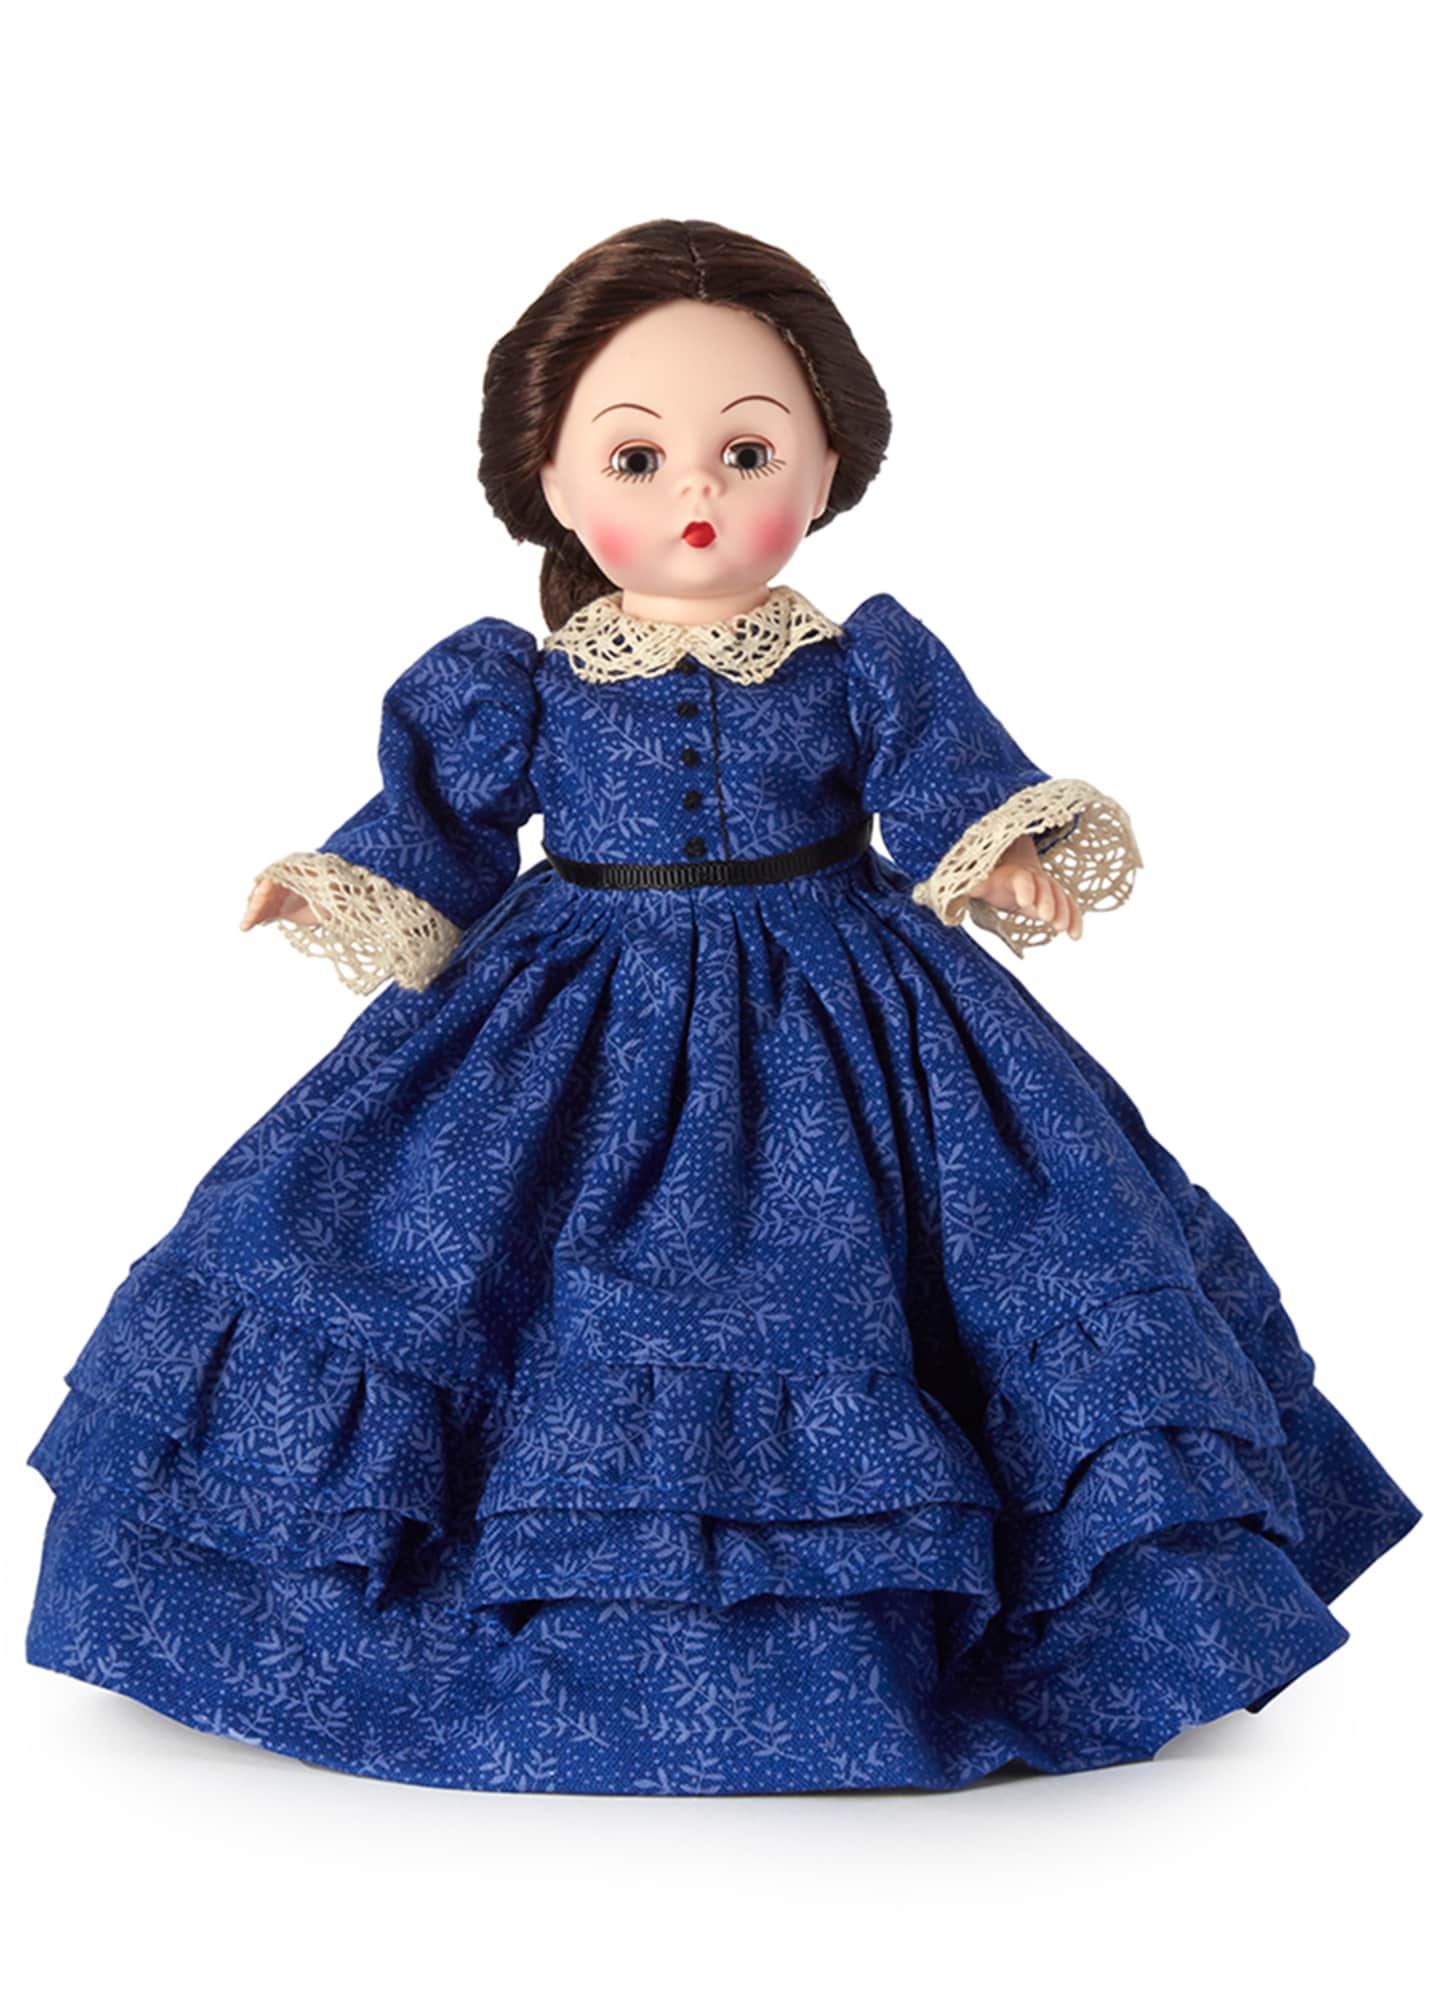 a madame alexander doll